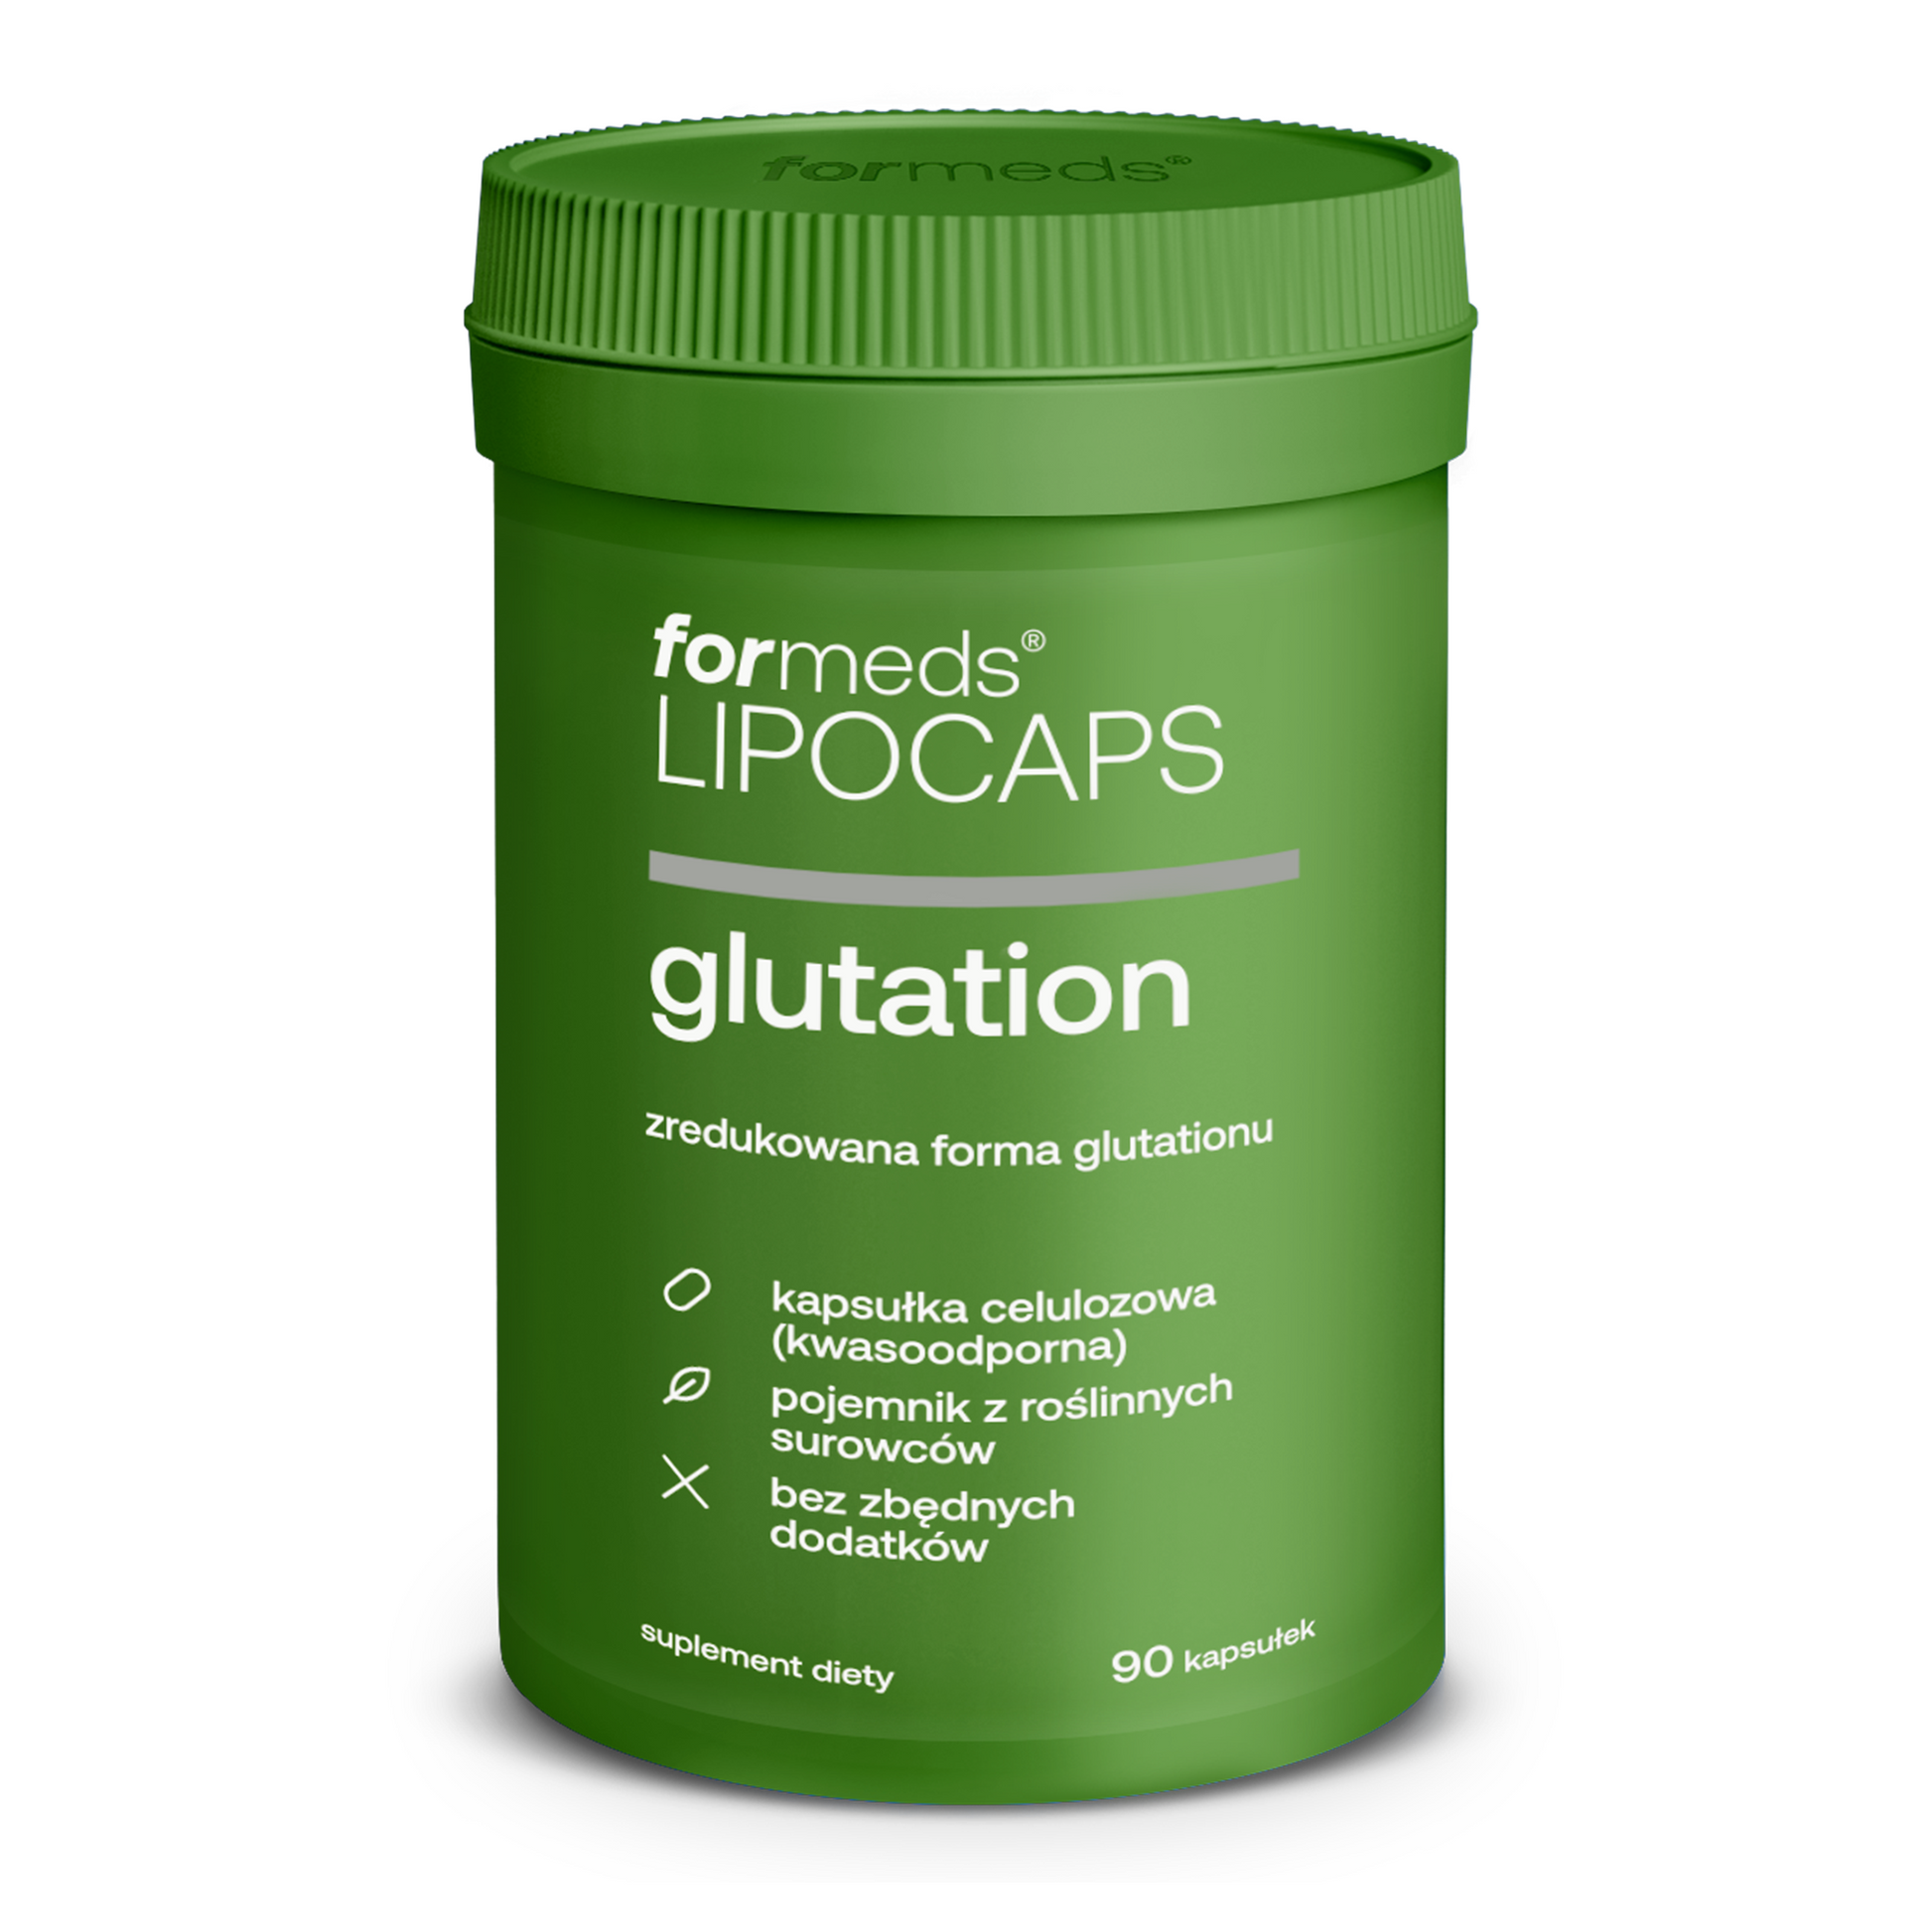 LIPOCAPS Glutation - glutation liposomalny tabletki, kapsułki